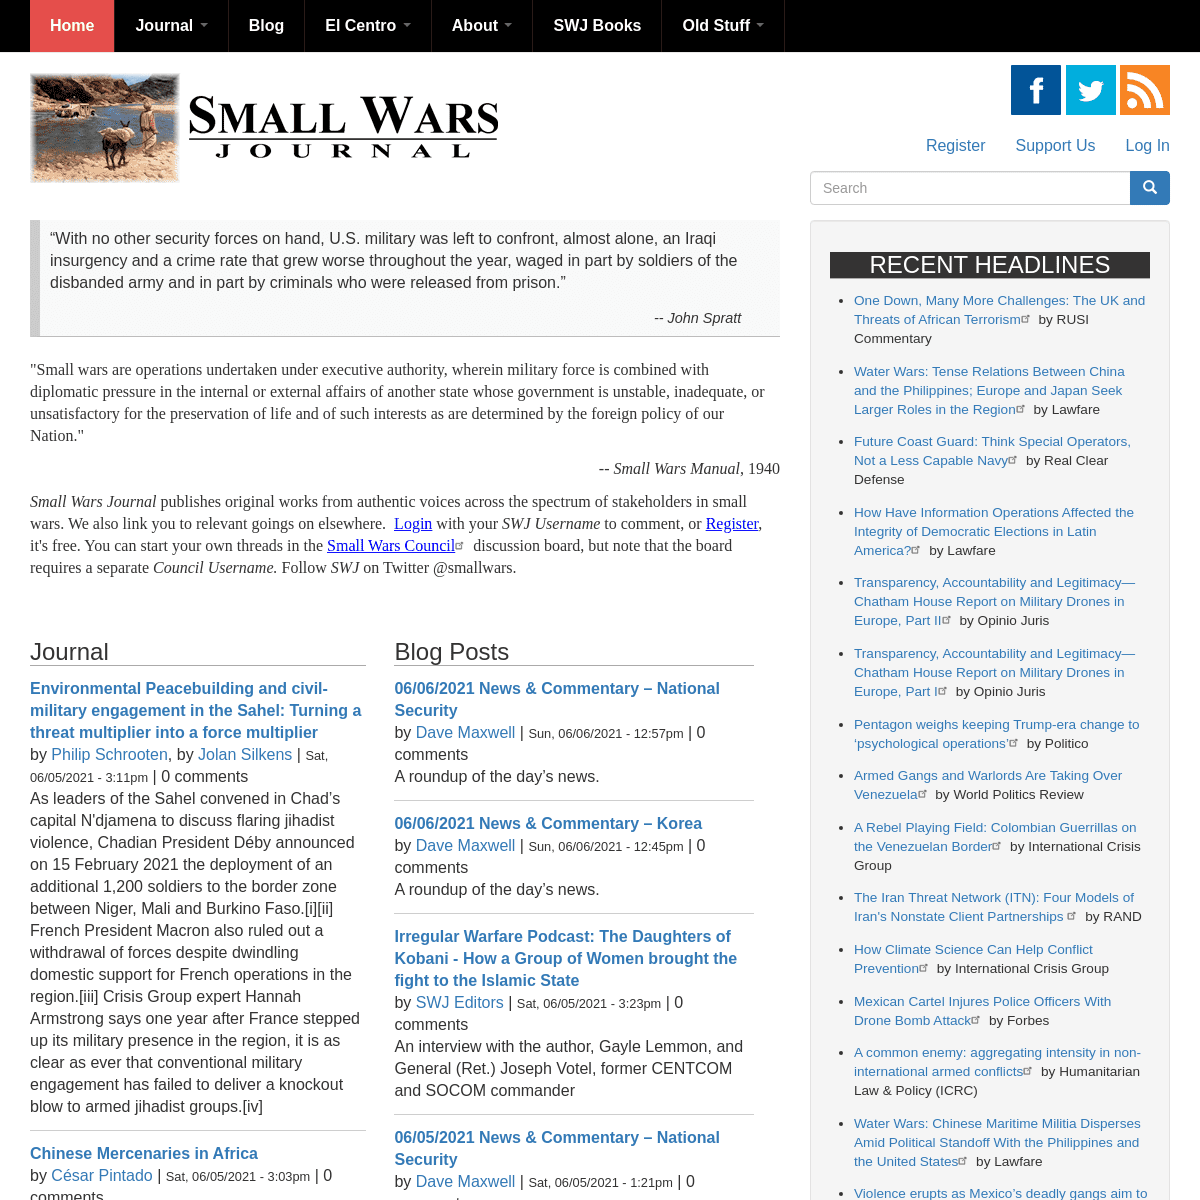 A complete backup of https://smallwarsjournal.com